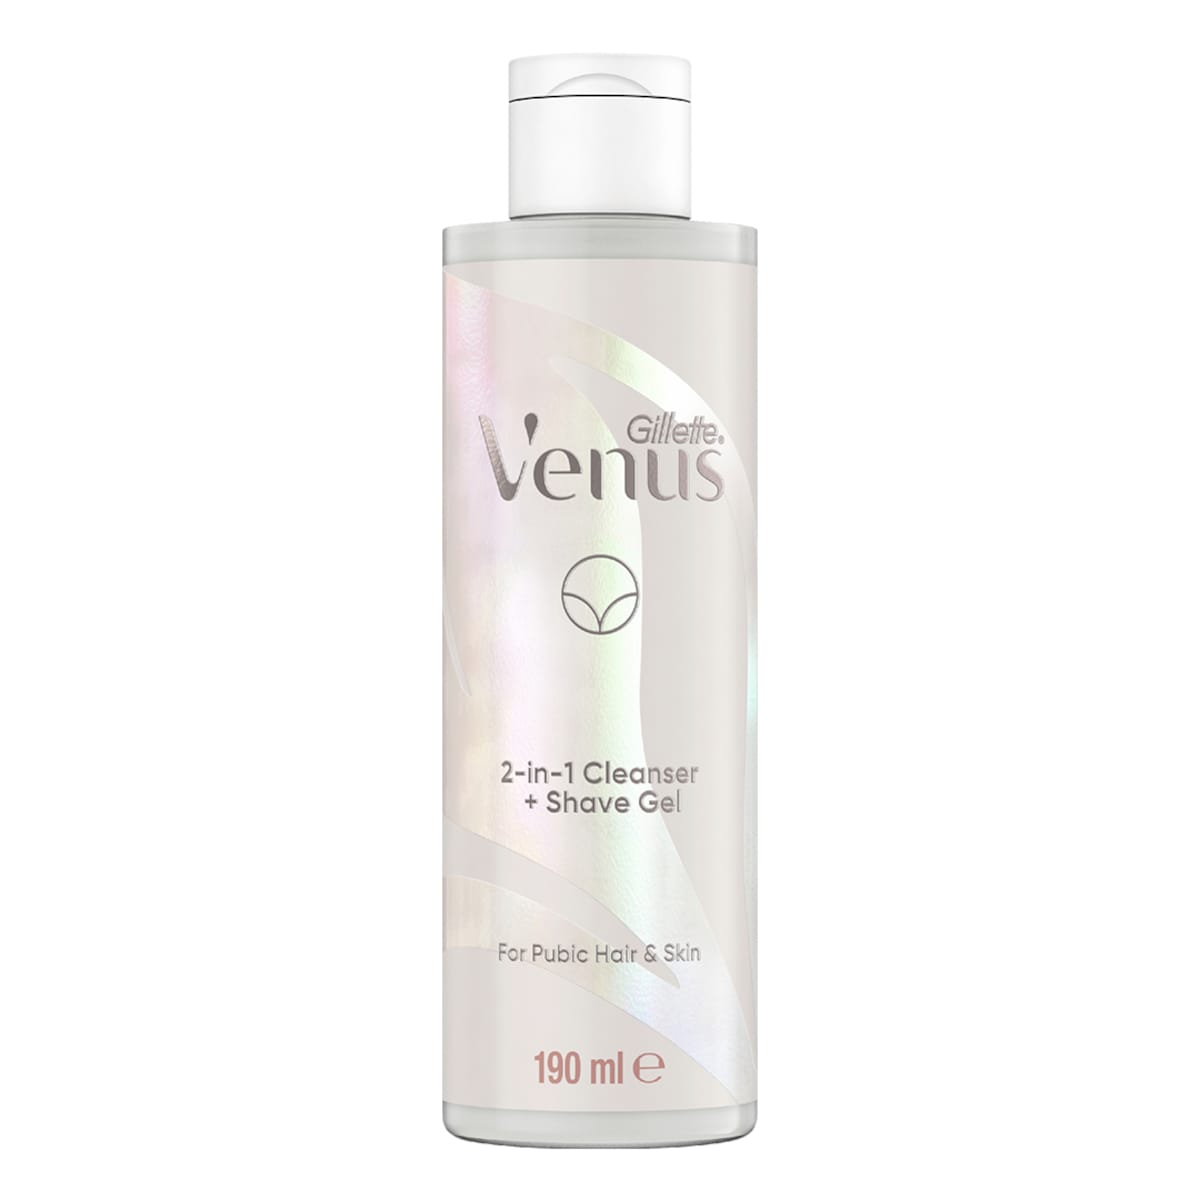 Gillette Venus 2-in-1 Cleanser + Shave Gel 190ml